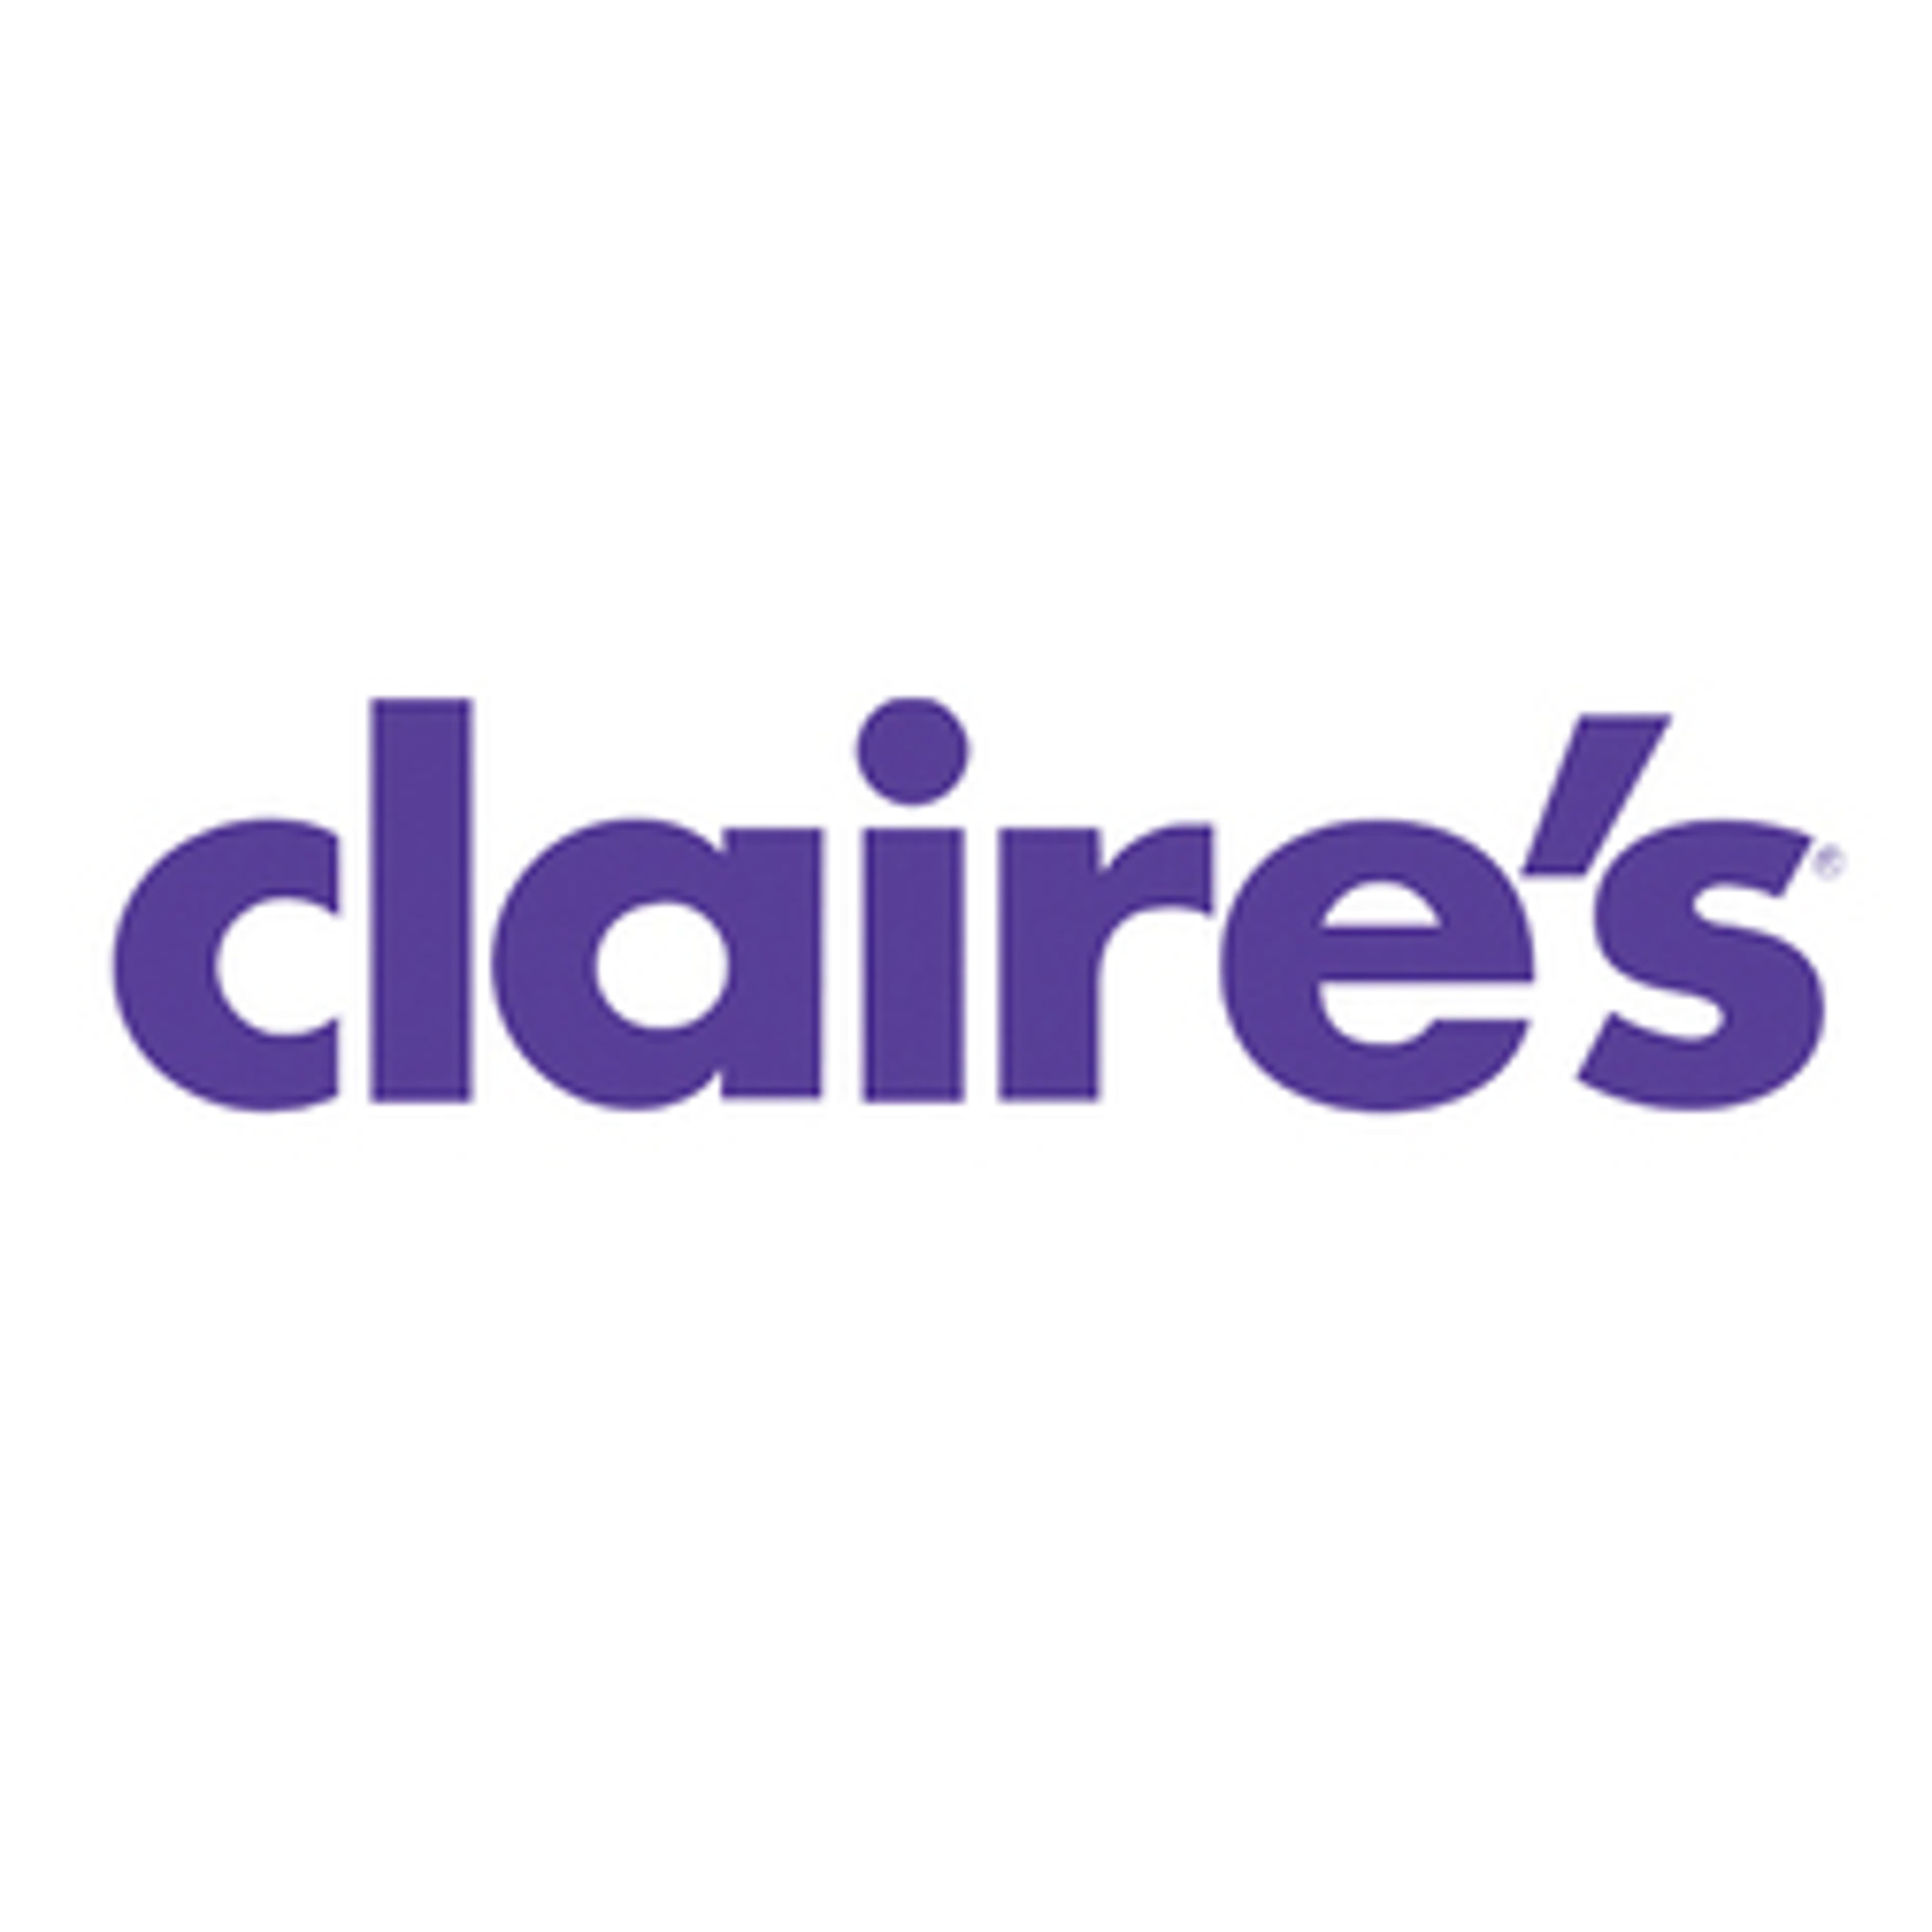  Claire's 